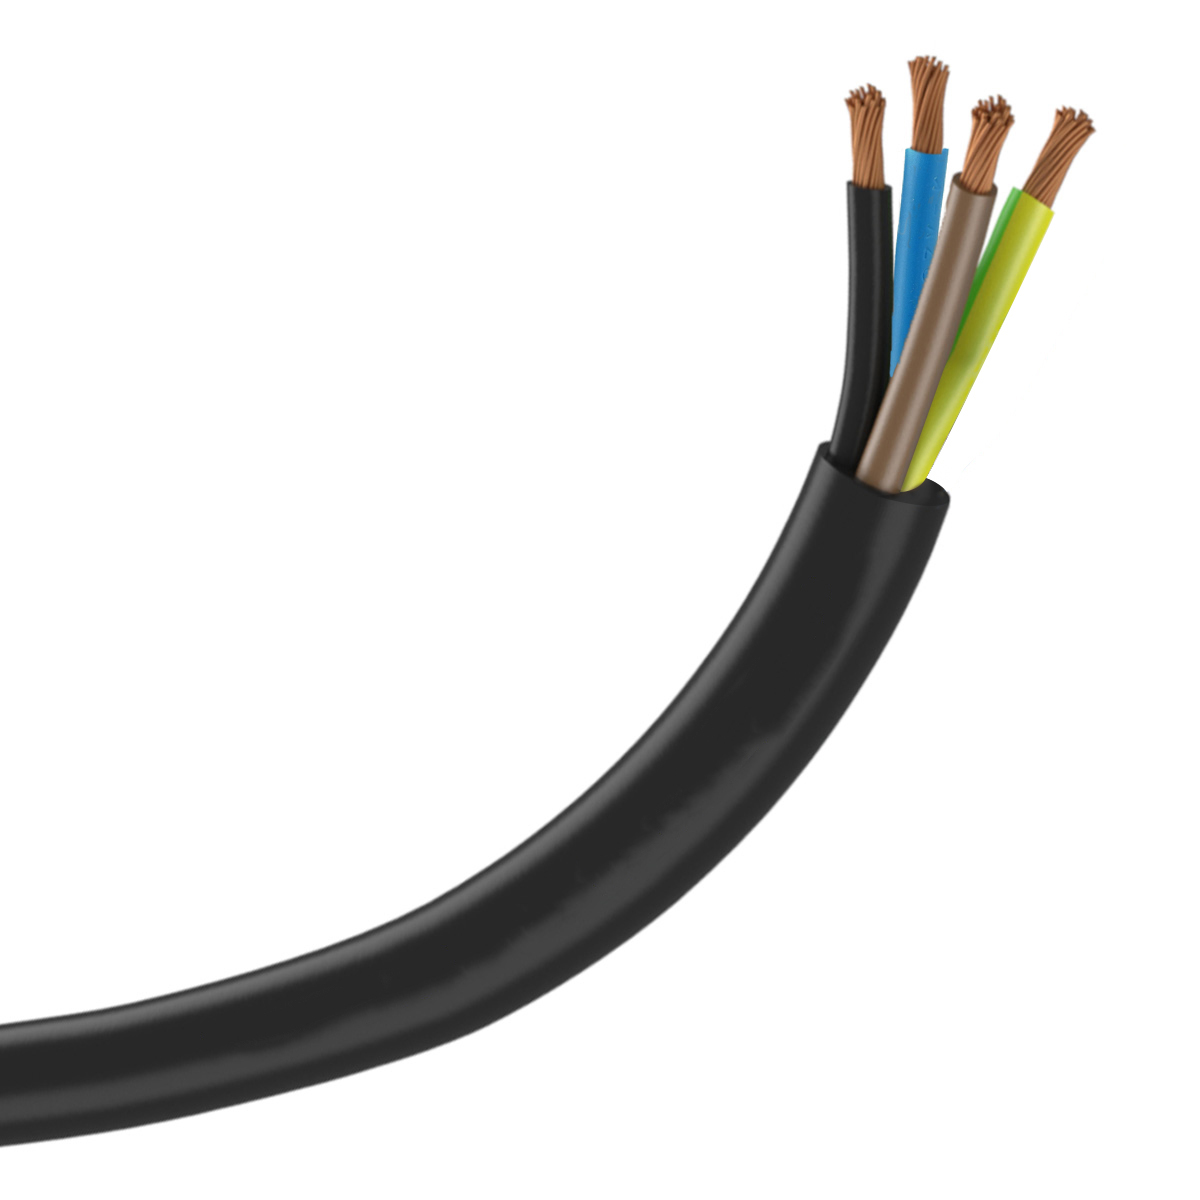 Lineax kabel H07RN-F 4x6mm2 - op rol kopen? Stage Roads